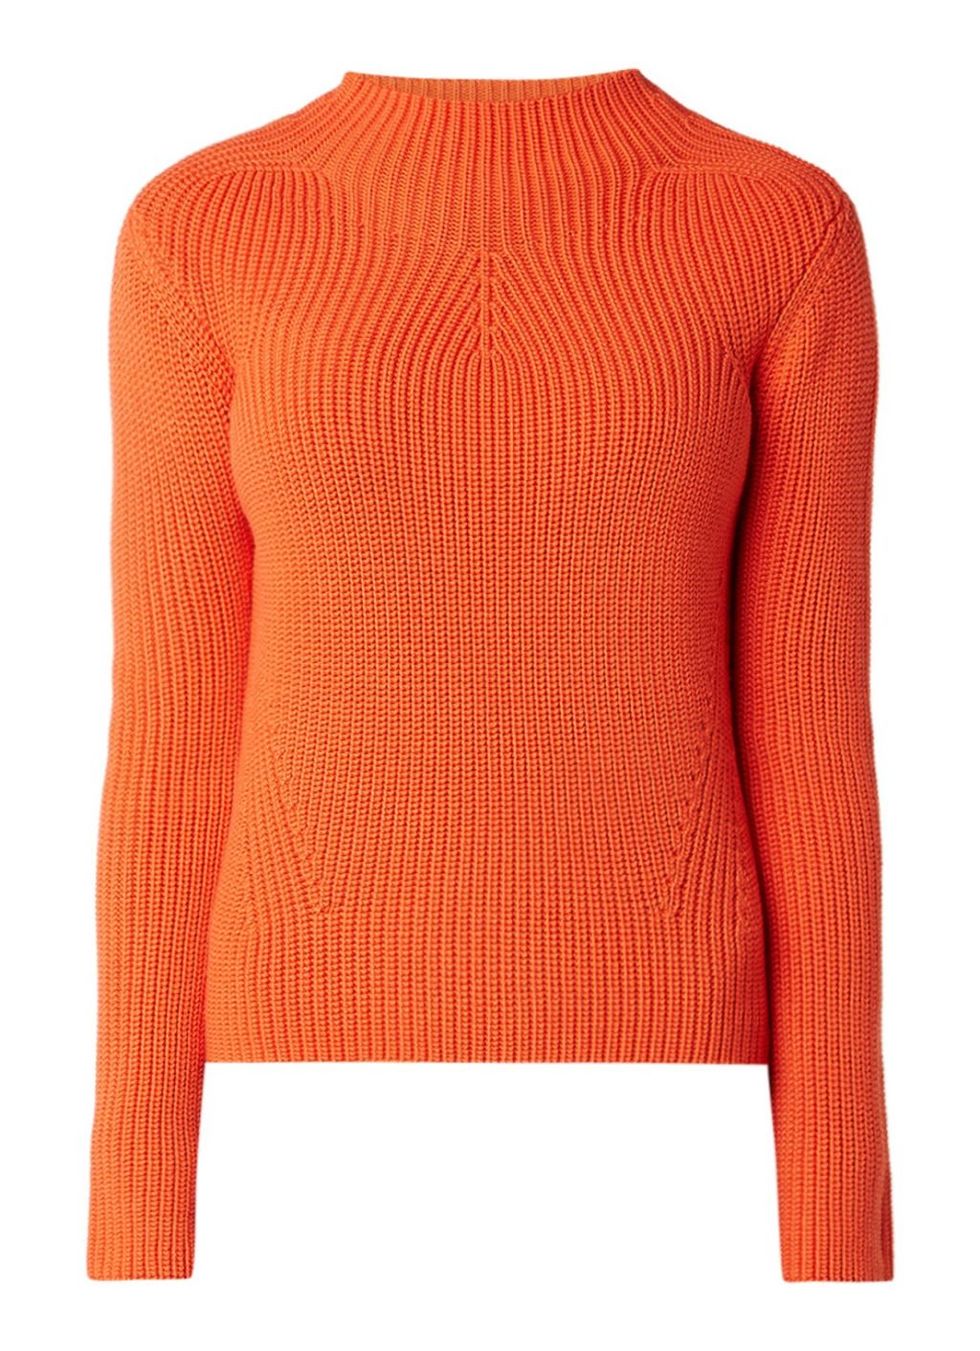 Clothing, Orange, Sweater, Outerwear, Neck, Sleeve, Jersey, Wool, Top, Beige, 